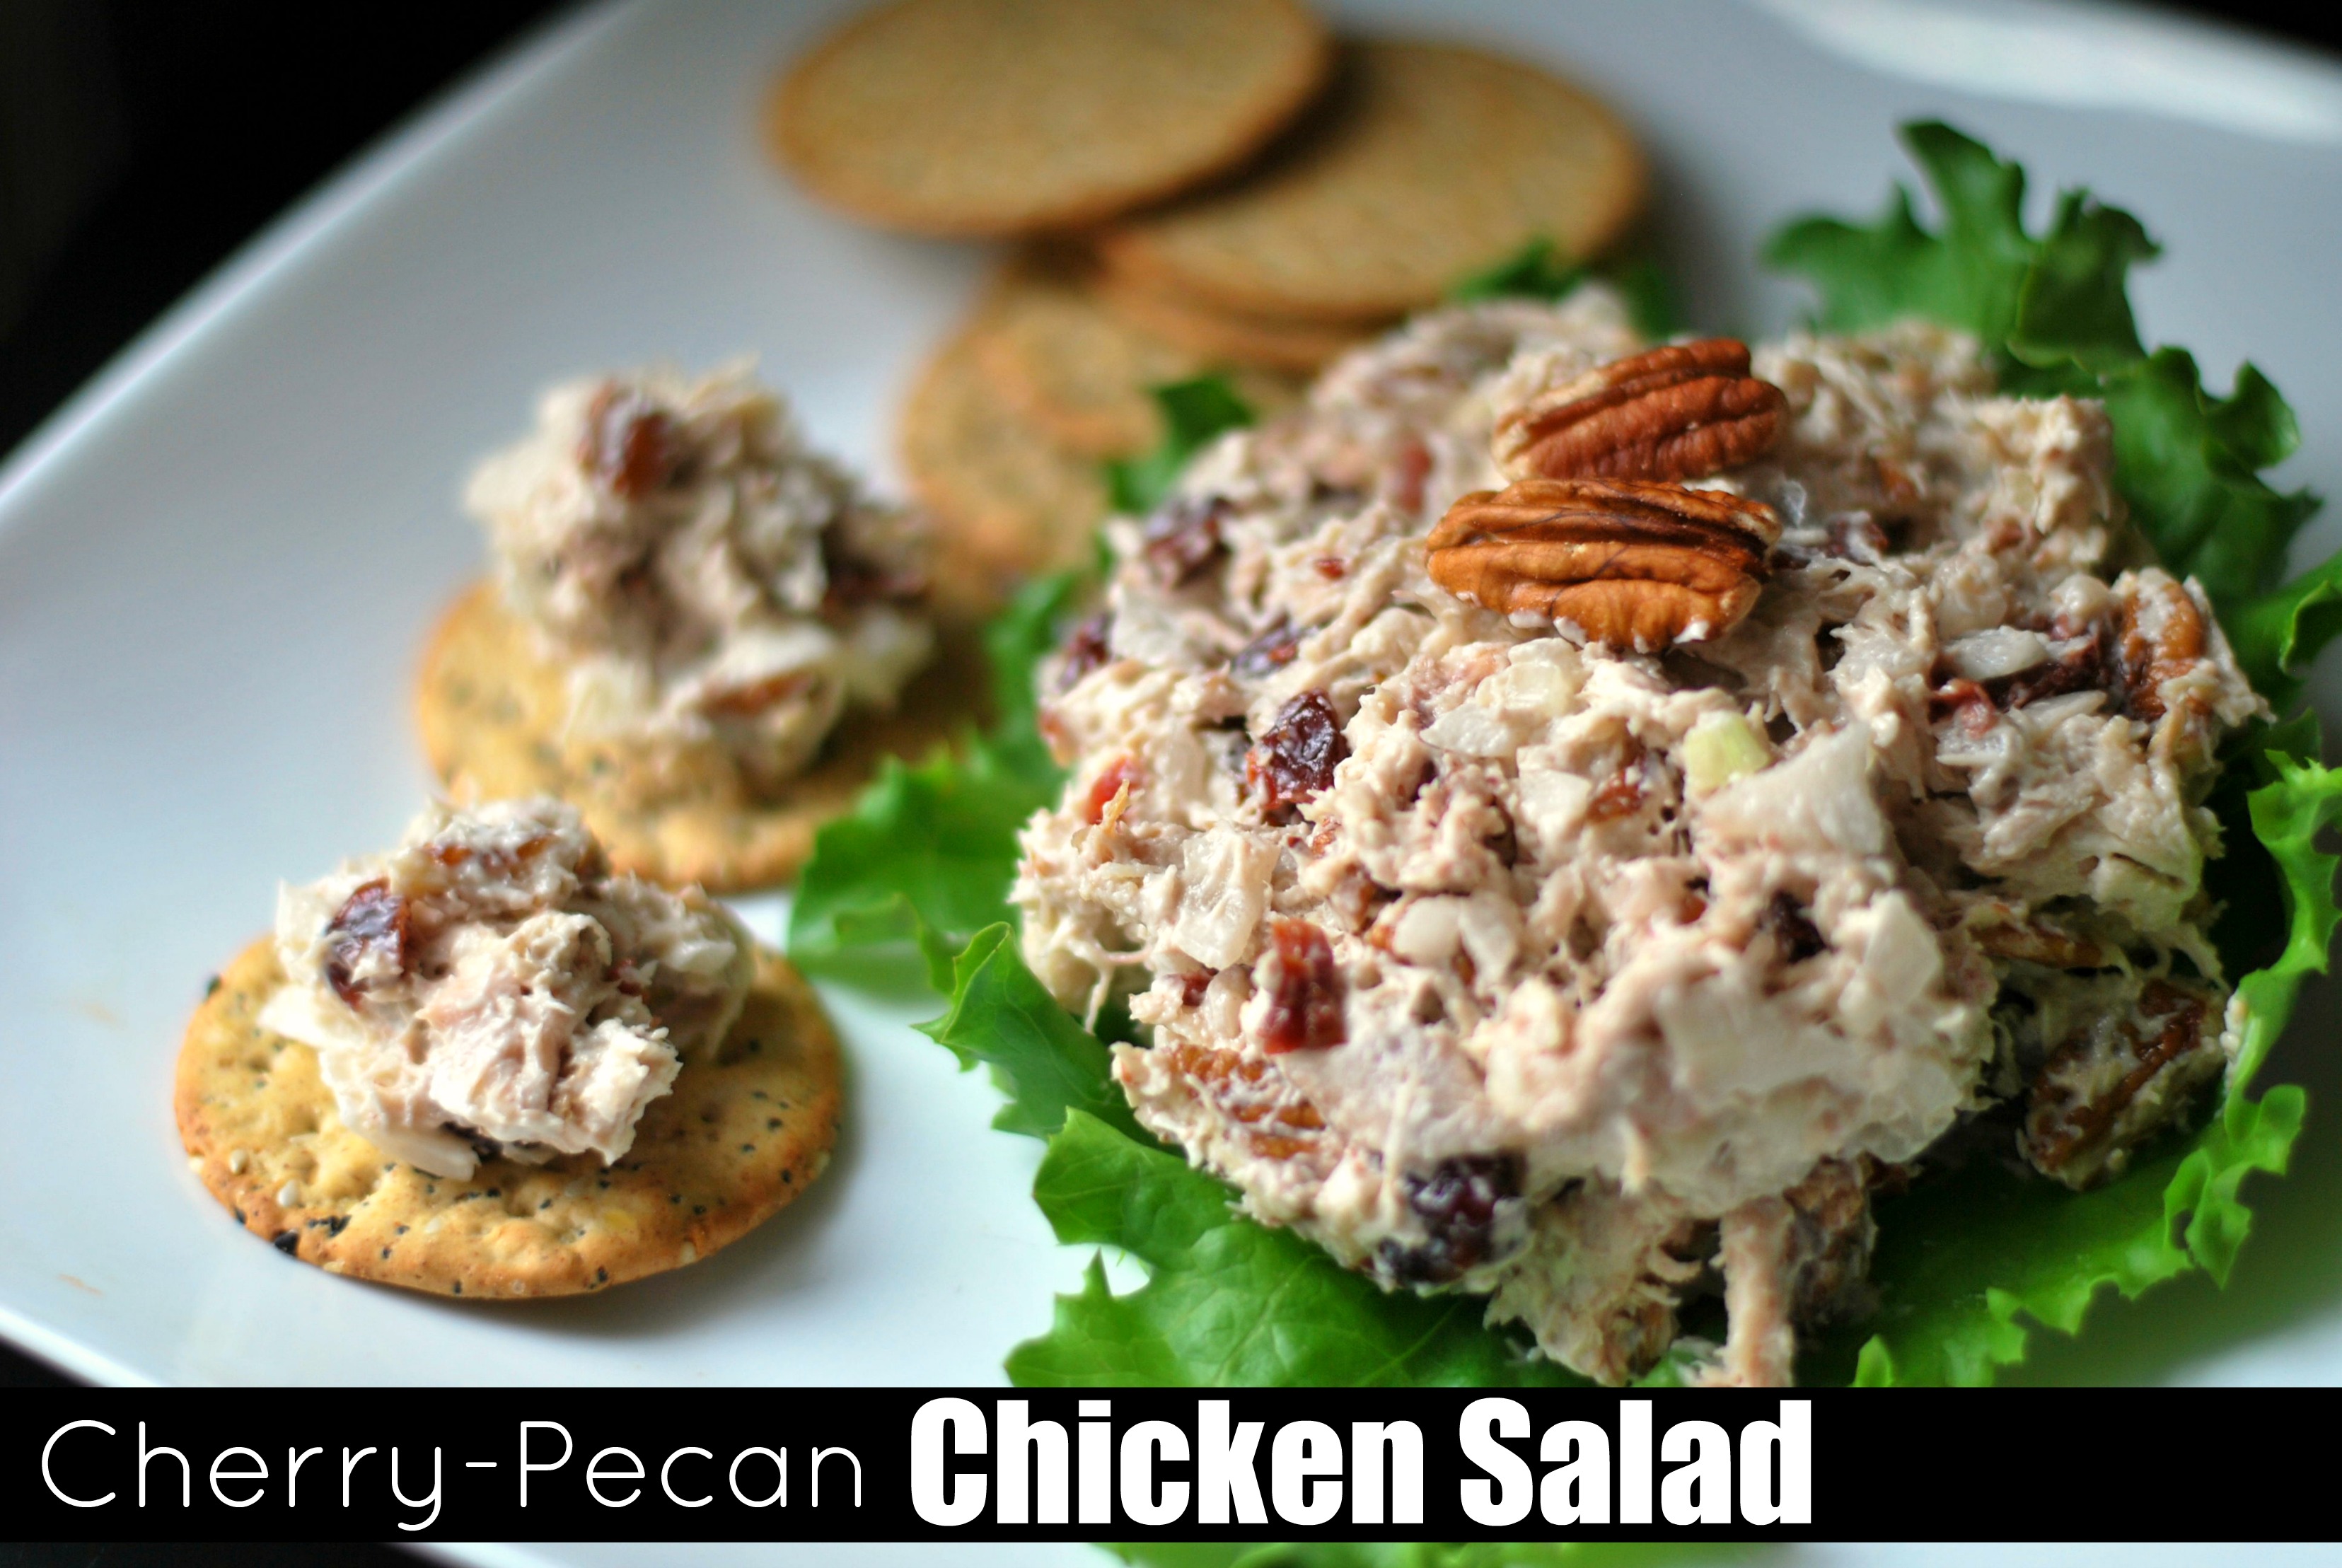 Cherry-Pecan Chicken Salad